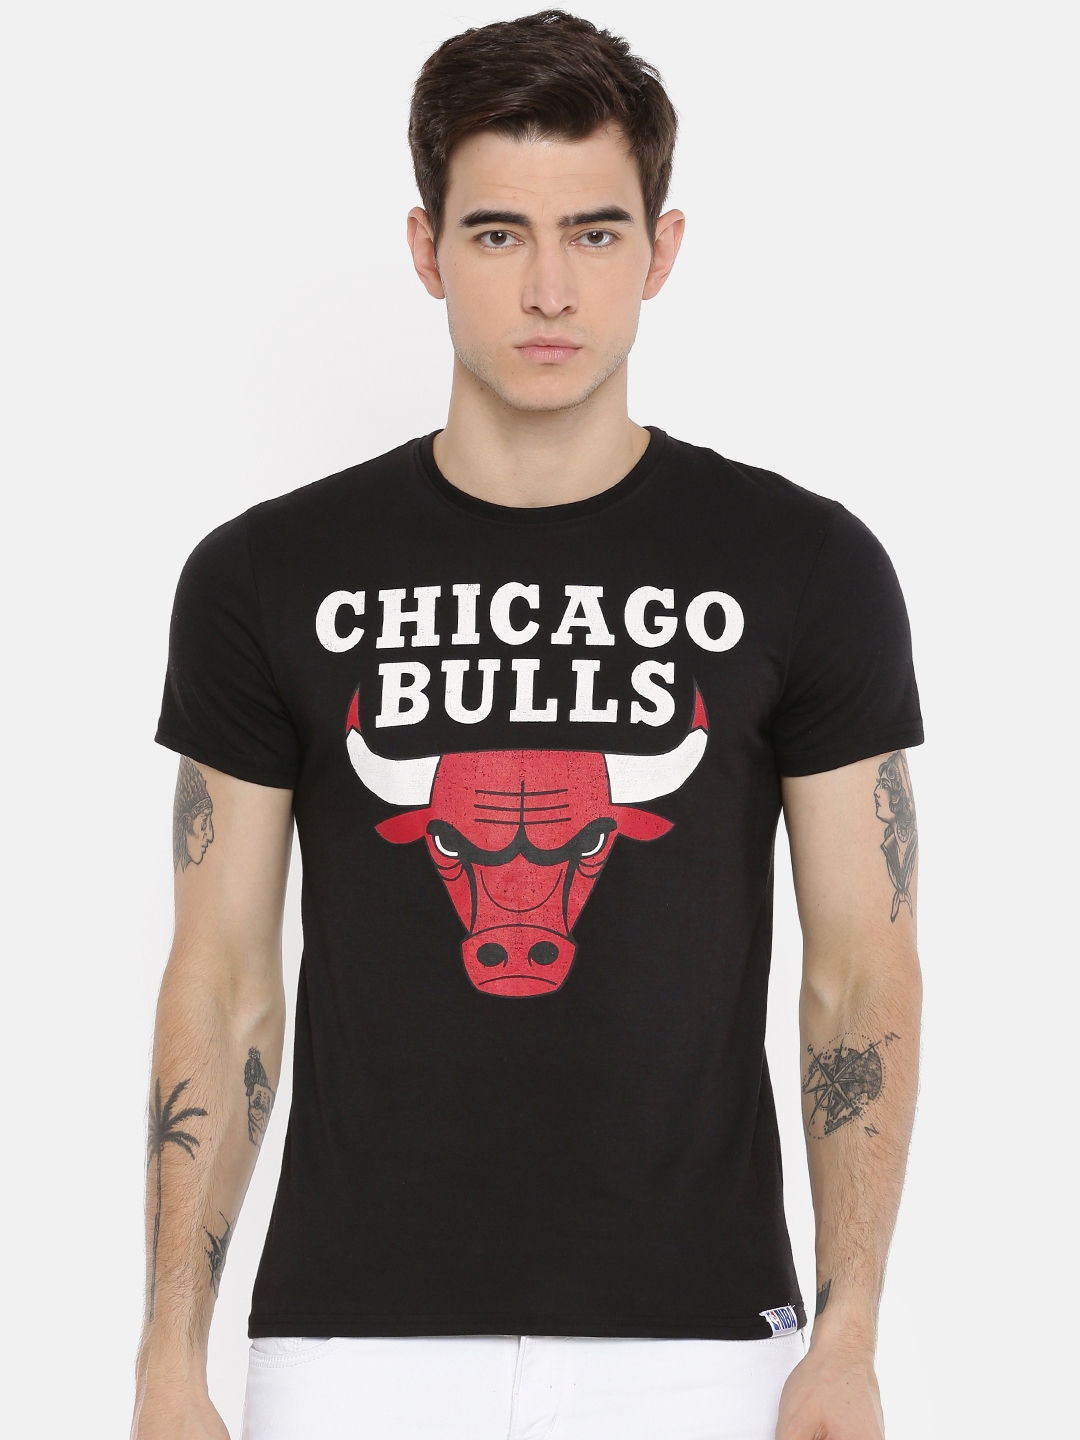 Chicago Bulls T-Shirt Chicago Bulls Basketball Team Mens Tee Shirt Short Slee. 